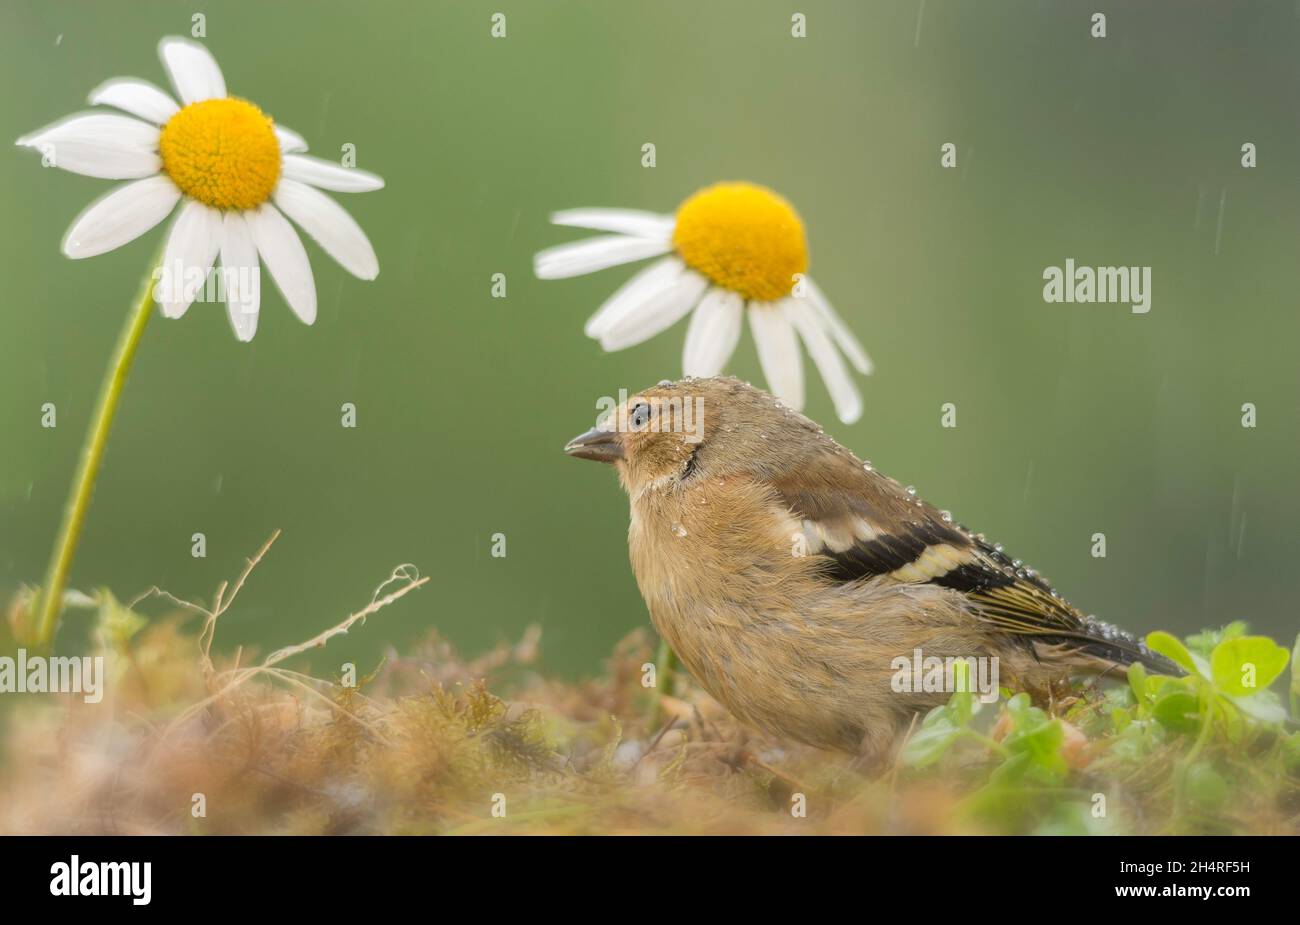 young bullfinch standing between flowers  while raining Stock Photo